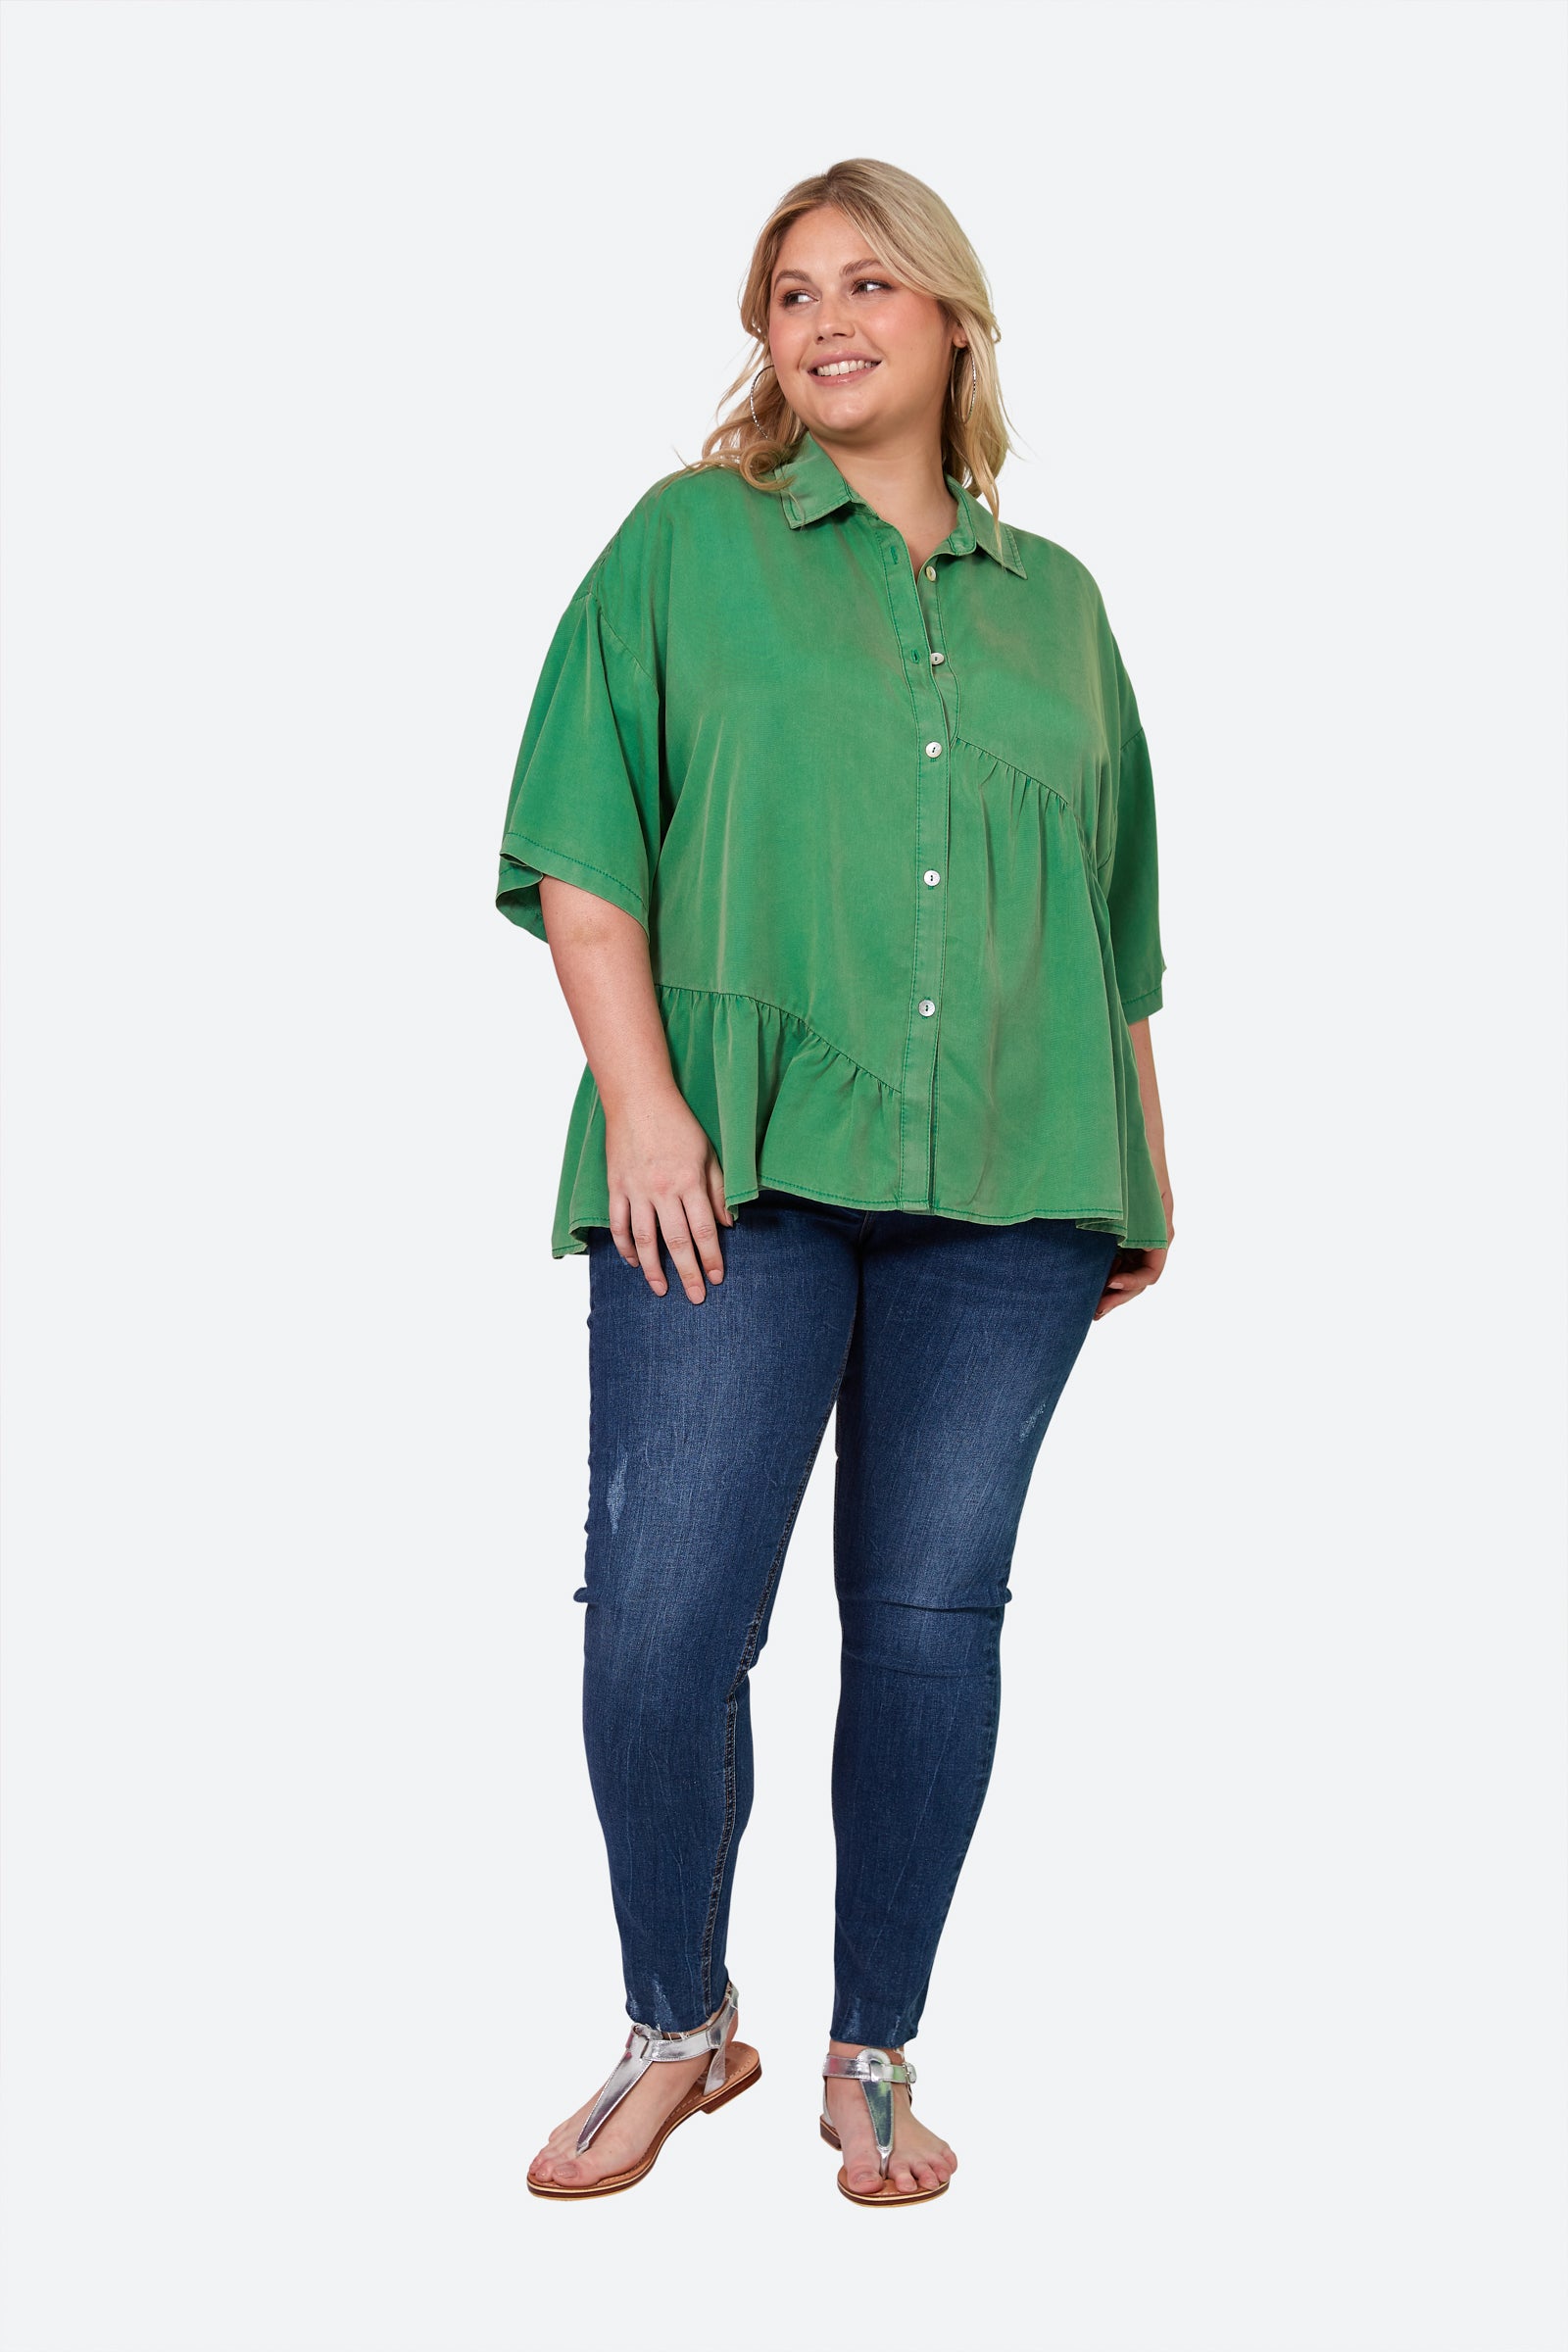 Elan Shirt - Meadow - eb&ive Clothing - Shirt One Size